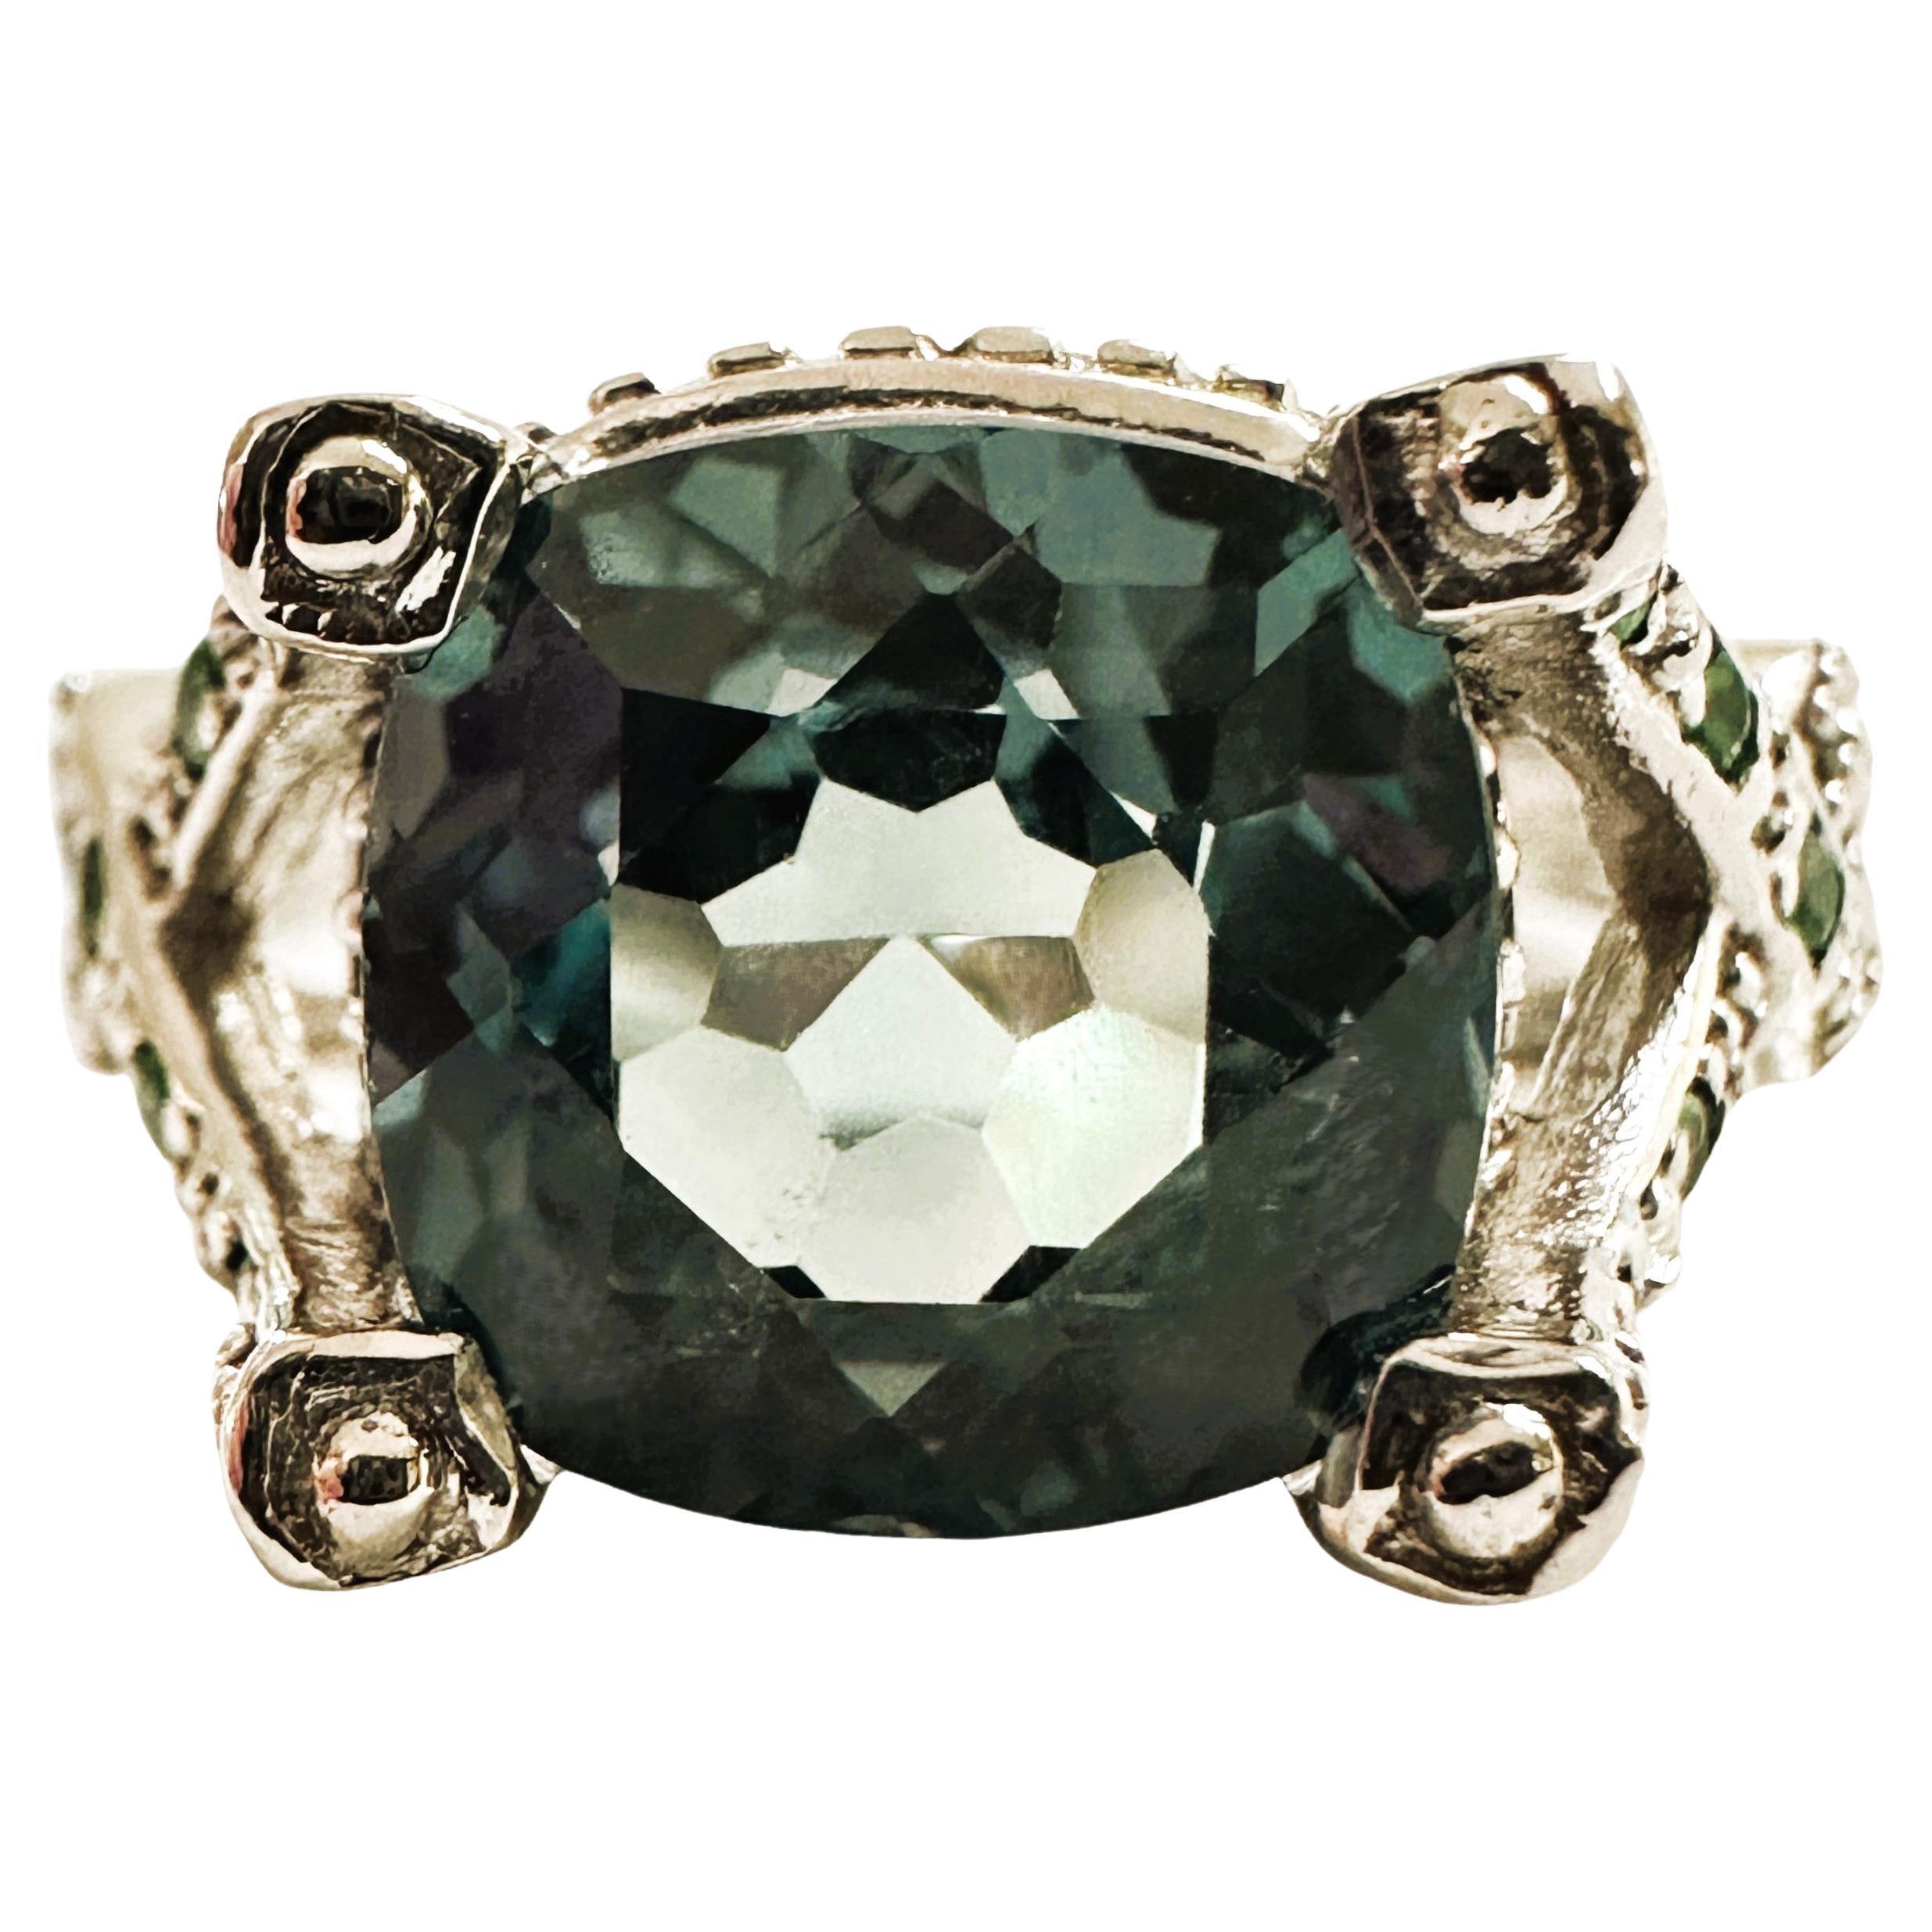 Nuevo anillo de zafiro verde azul africano de 4 quilates, talla 6,25